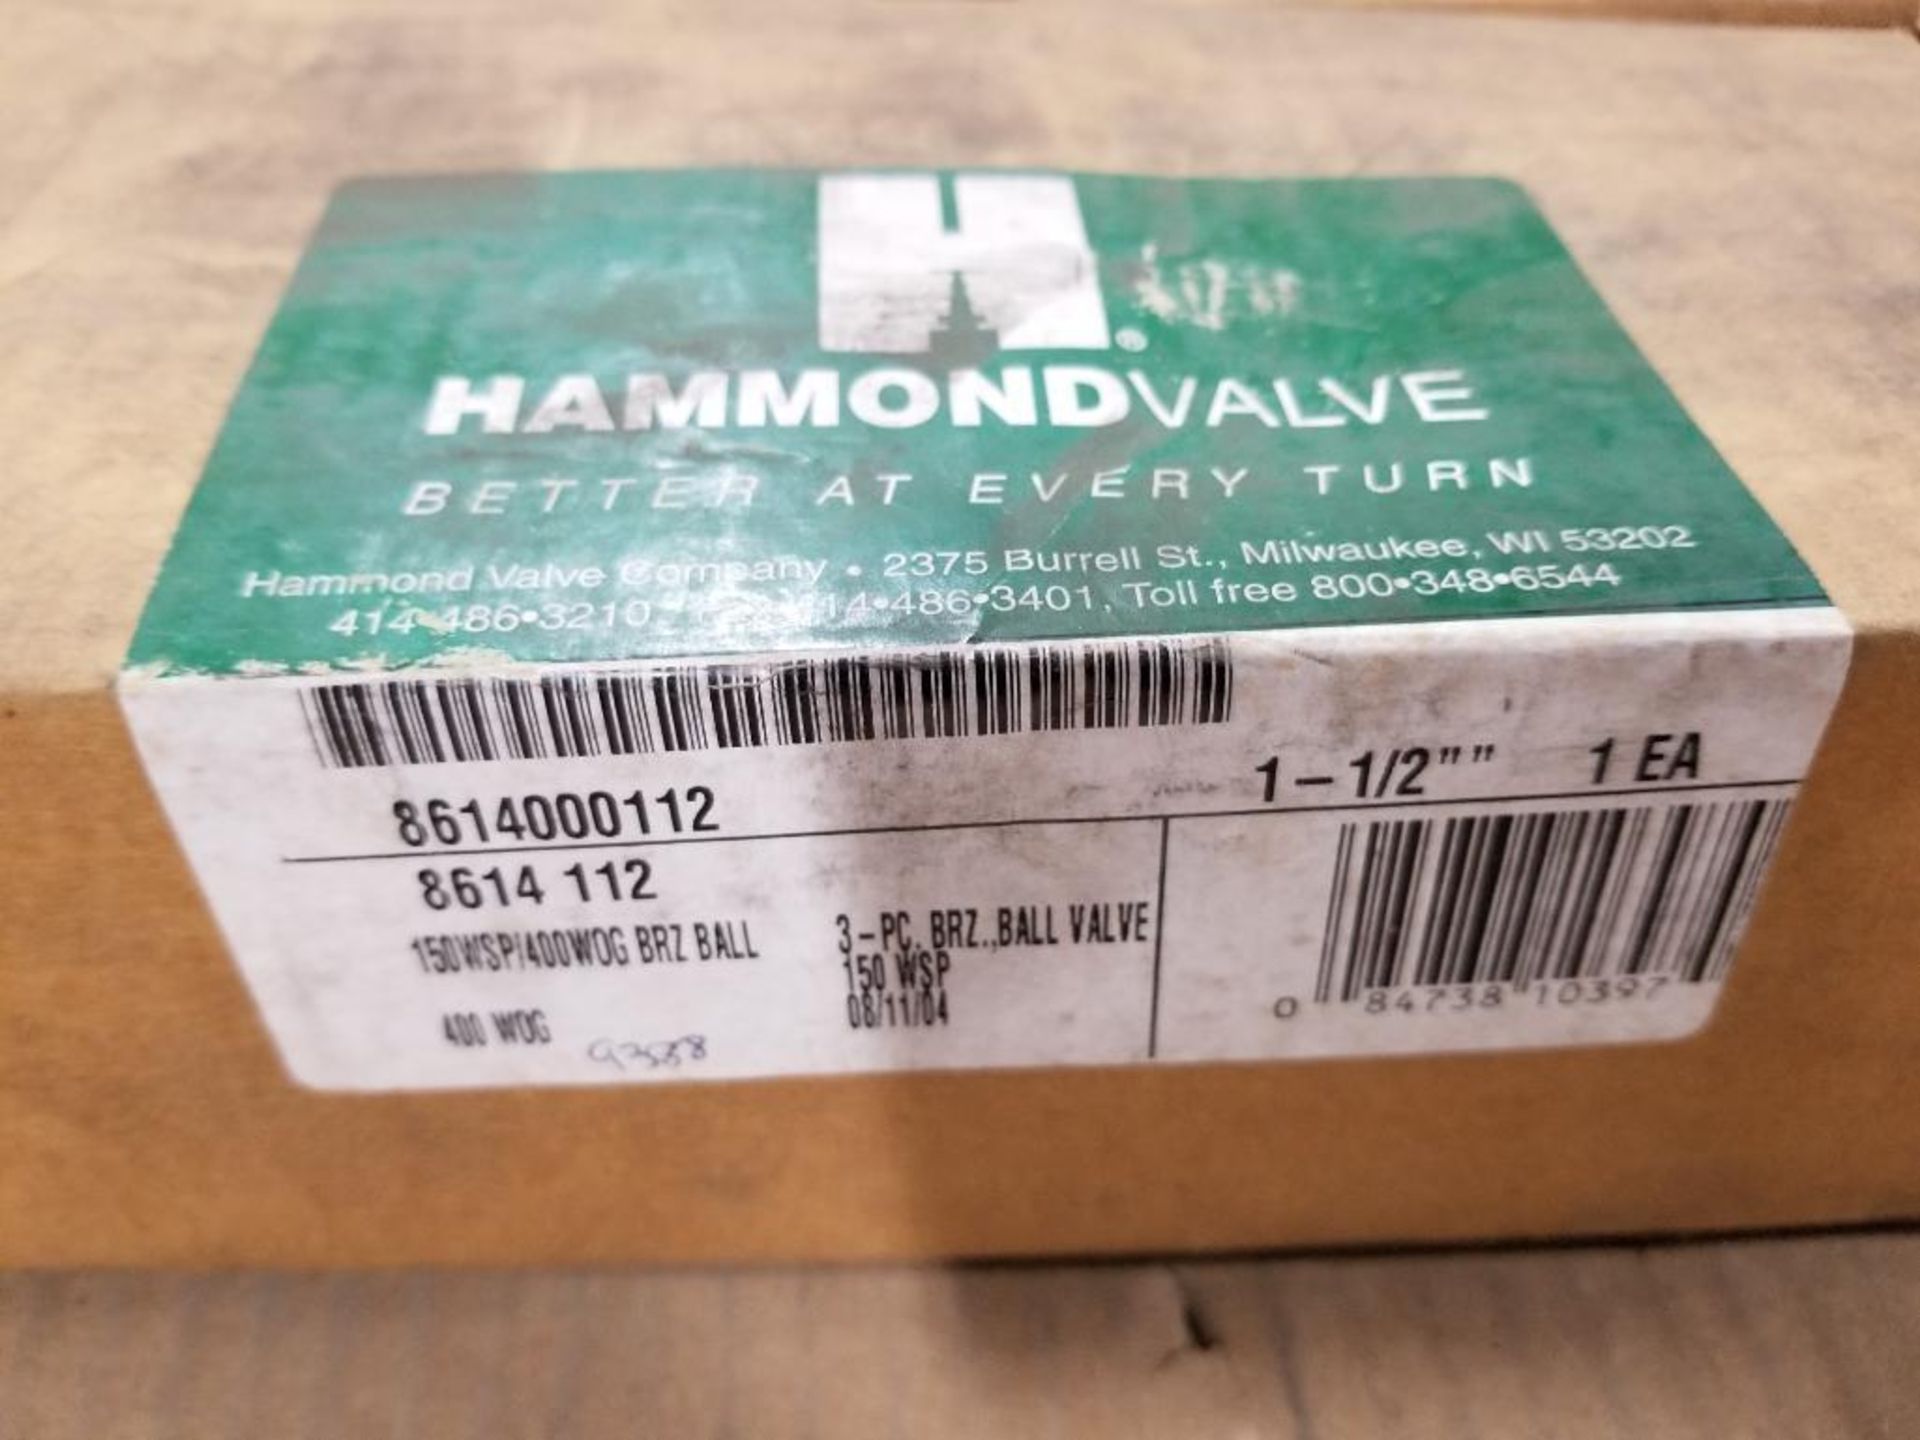 Qty 5 - Hammond valve. Part number 8614000112. - Image 2 of 6